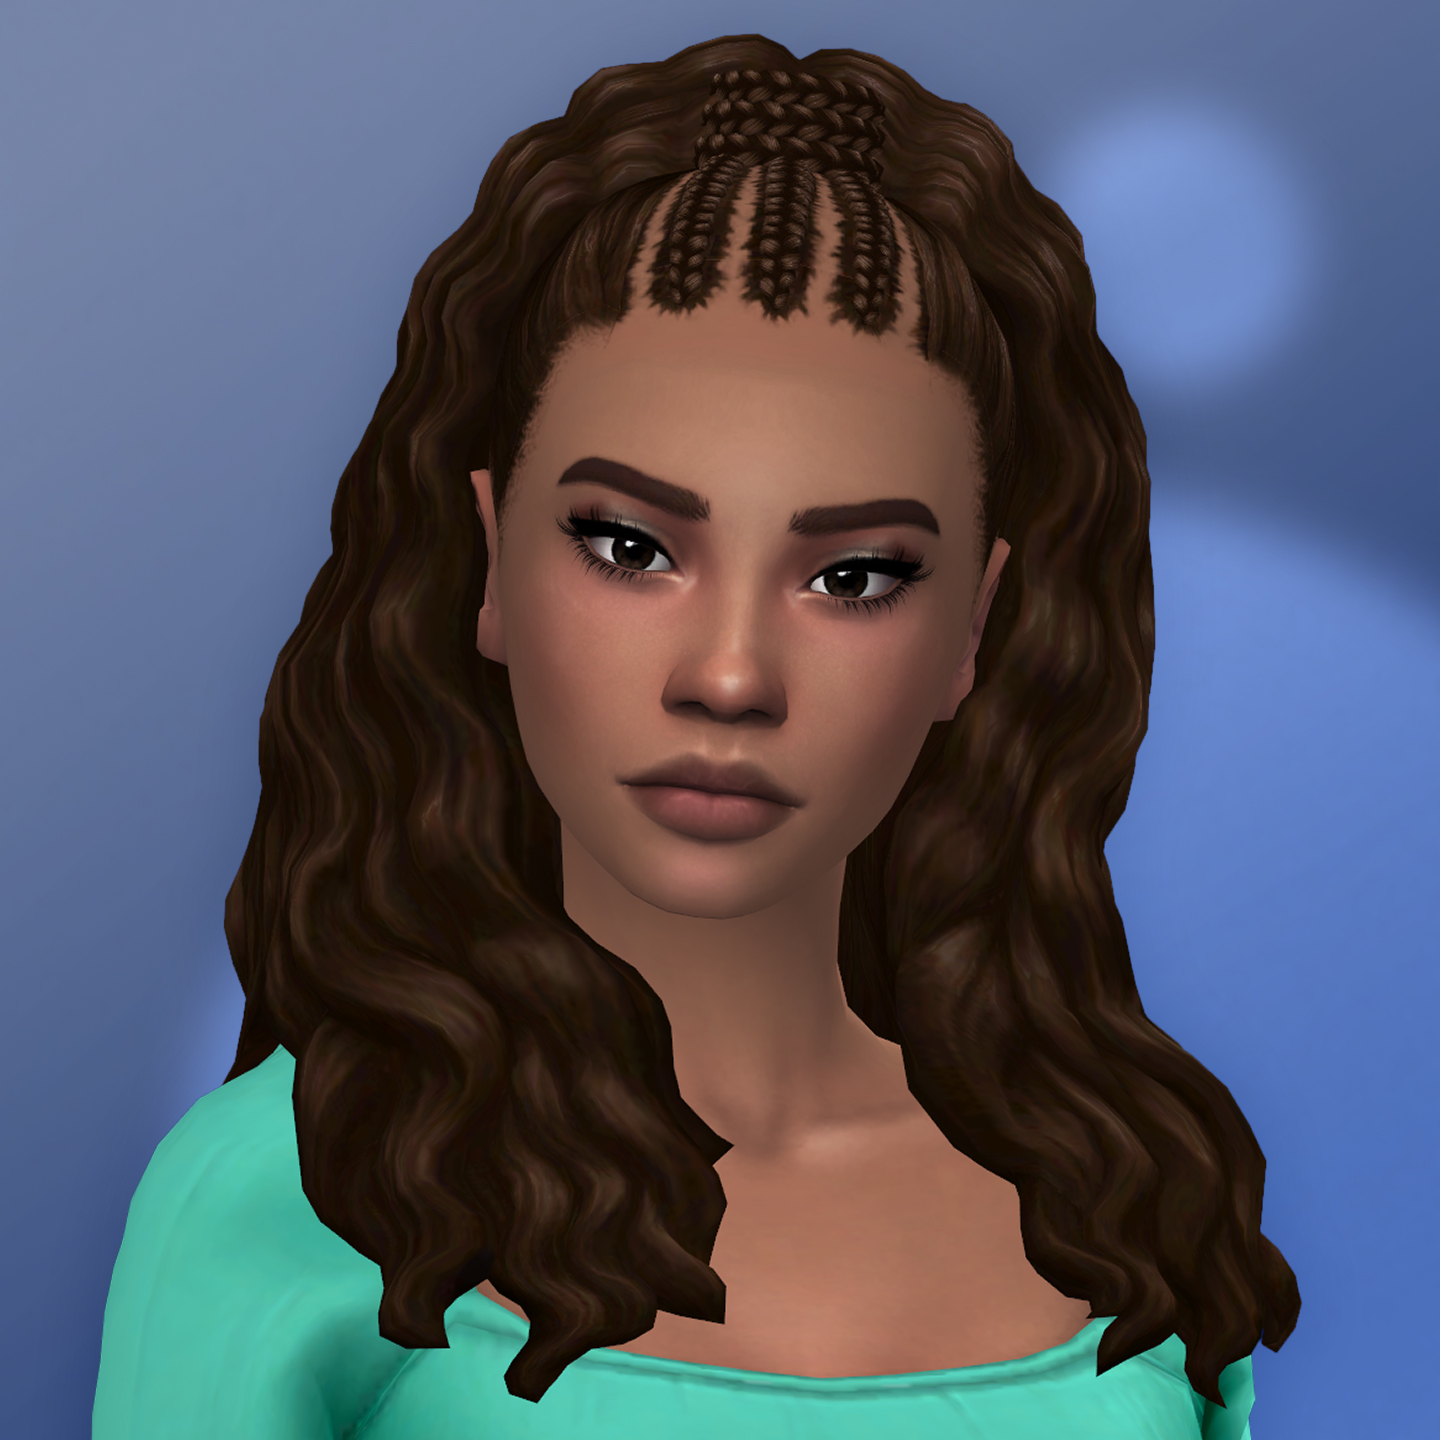 Prudence Hair - The Sims 4 Create a Sim - CurseForge